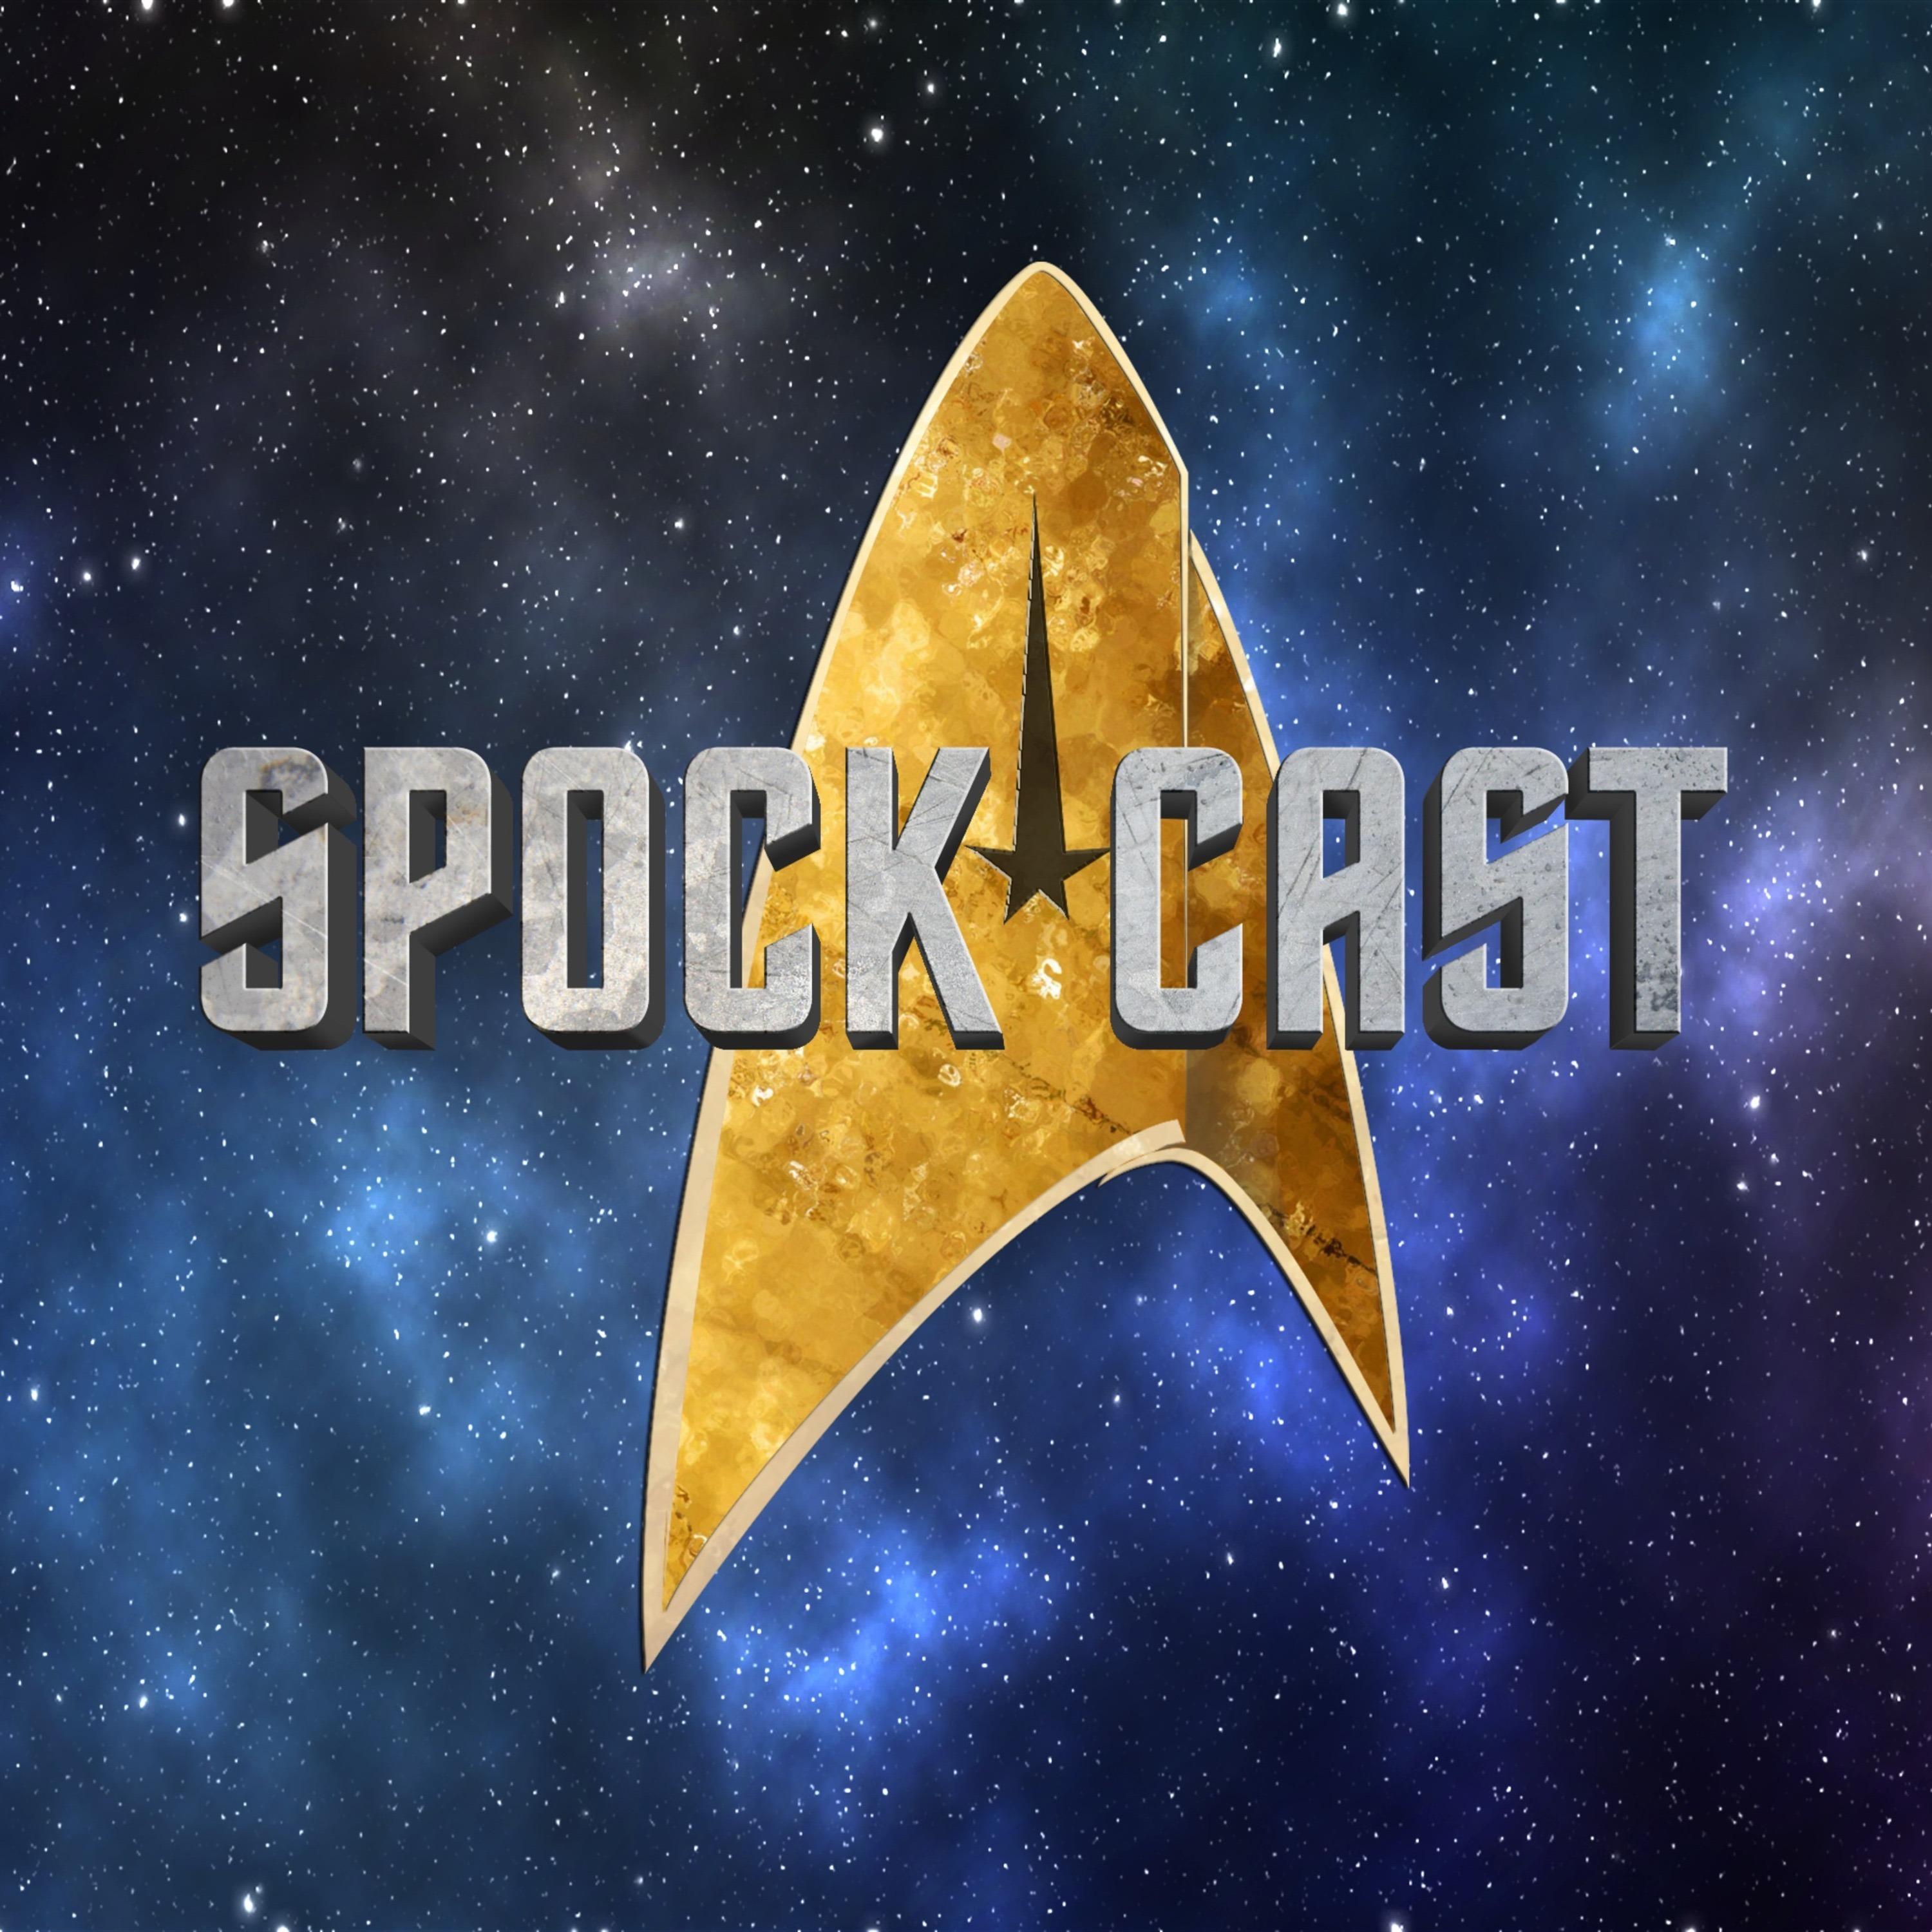 Spockcast - a Star Trek Strange New Worlds & Lower Decks podcast